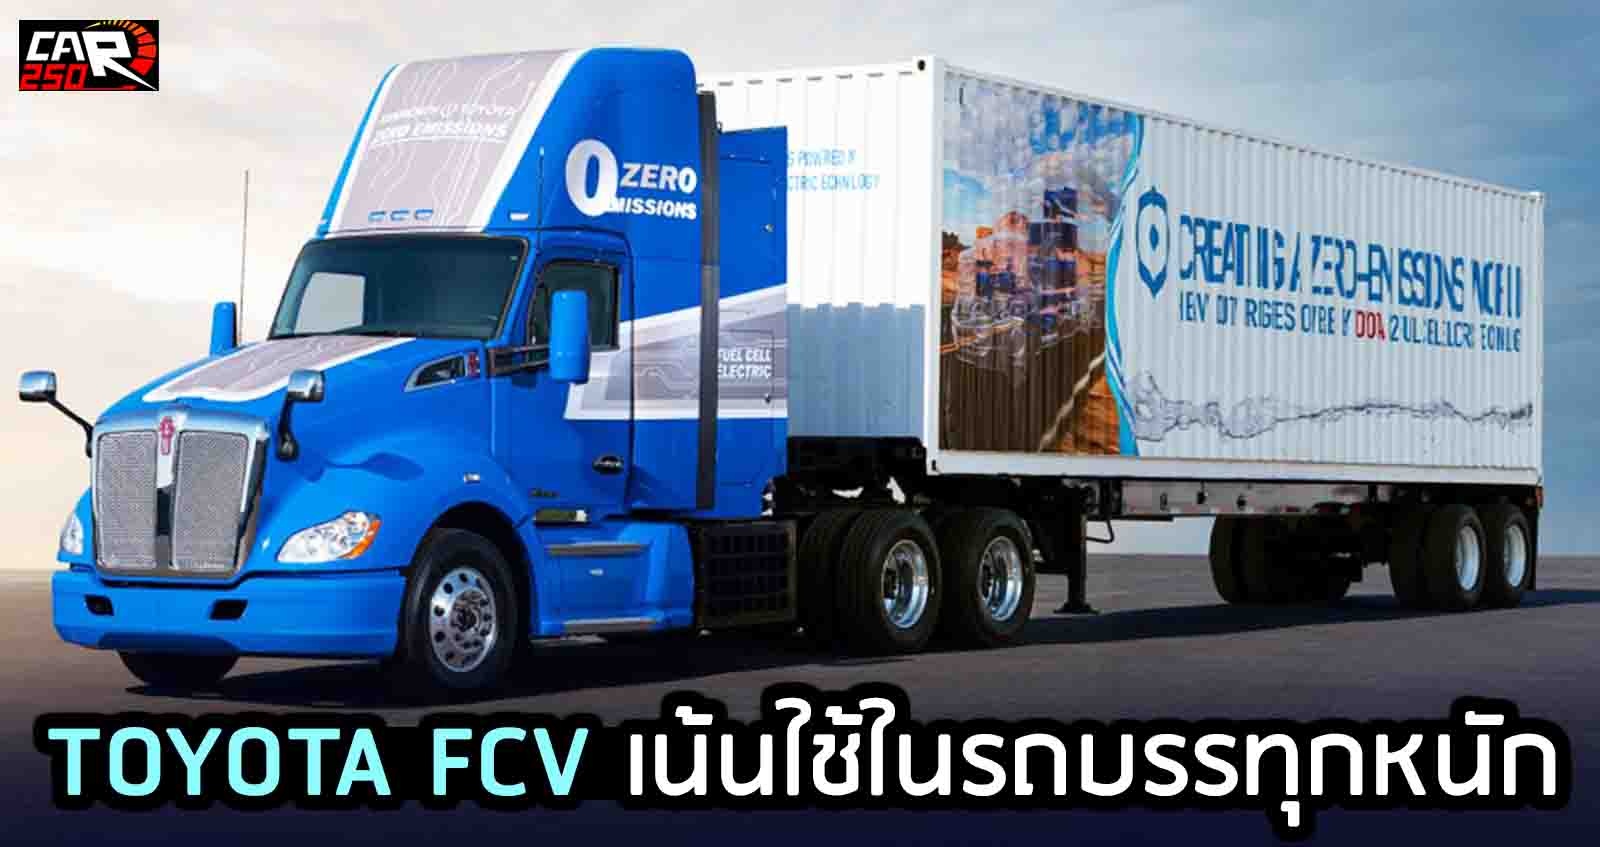 TOYOTA FCV เน้นใช้ในรถบรรทุกหนัก วิ่งได้ถึง 480 กม./ถัง